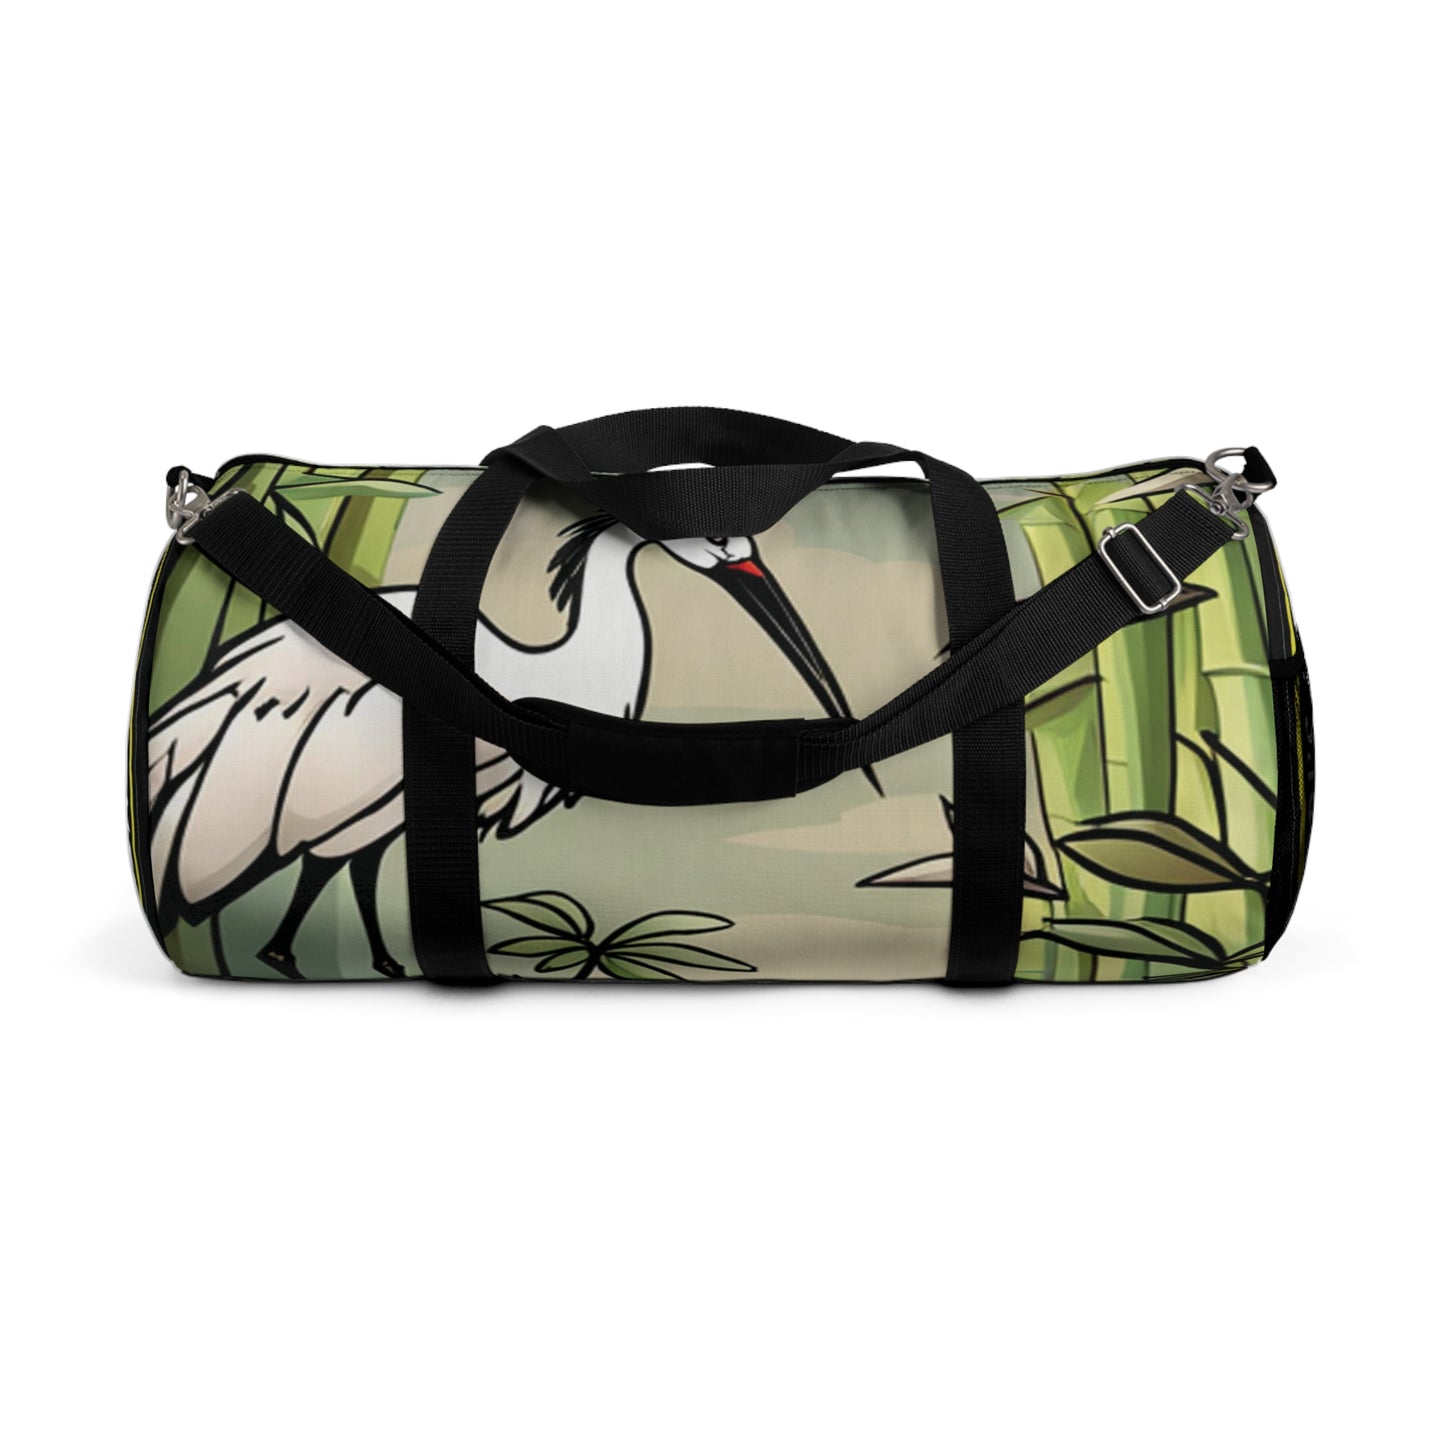 Villari's Crane Duffel Bag